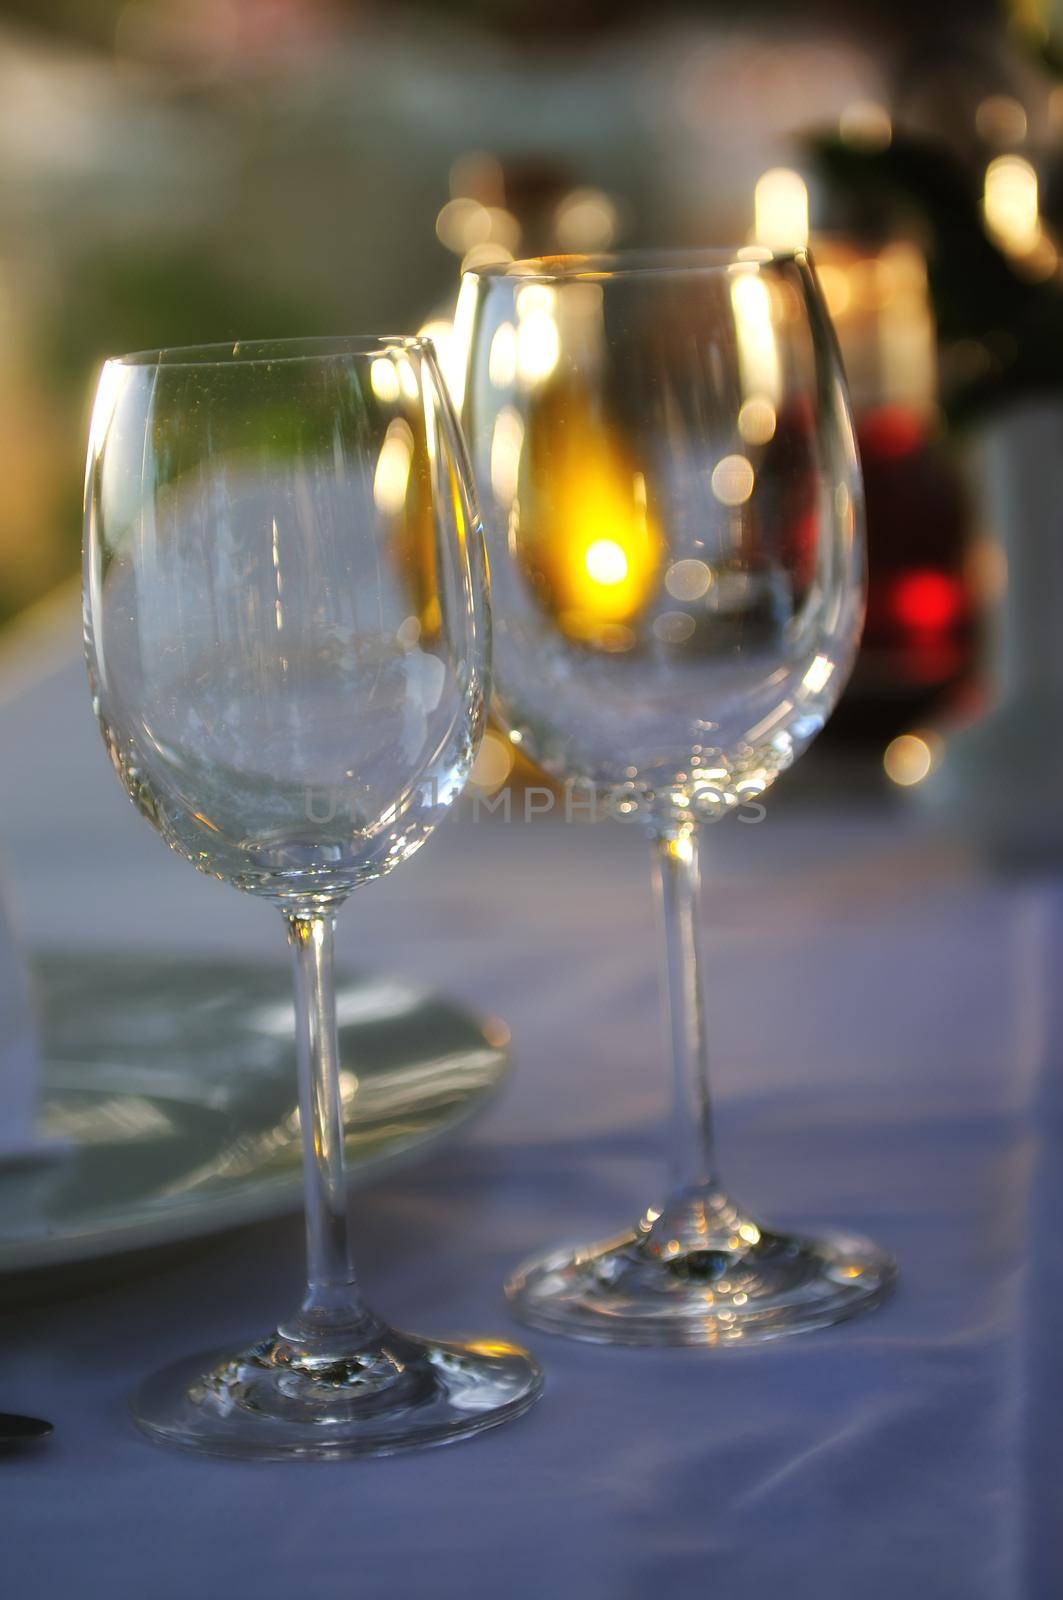 empty vine glasses at outdoor restaurant 